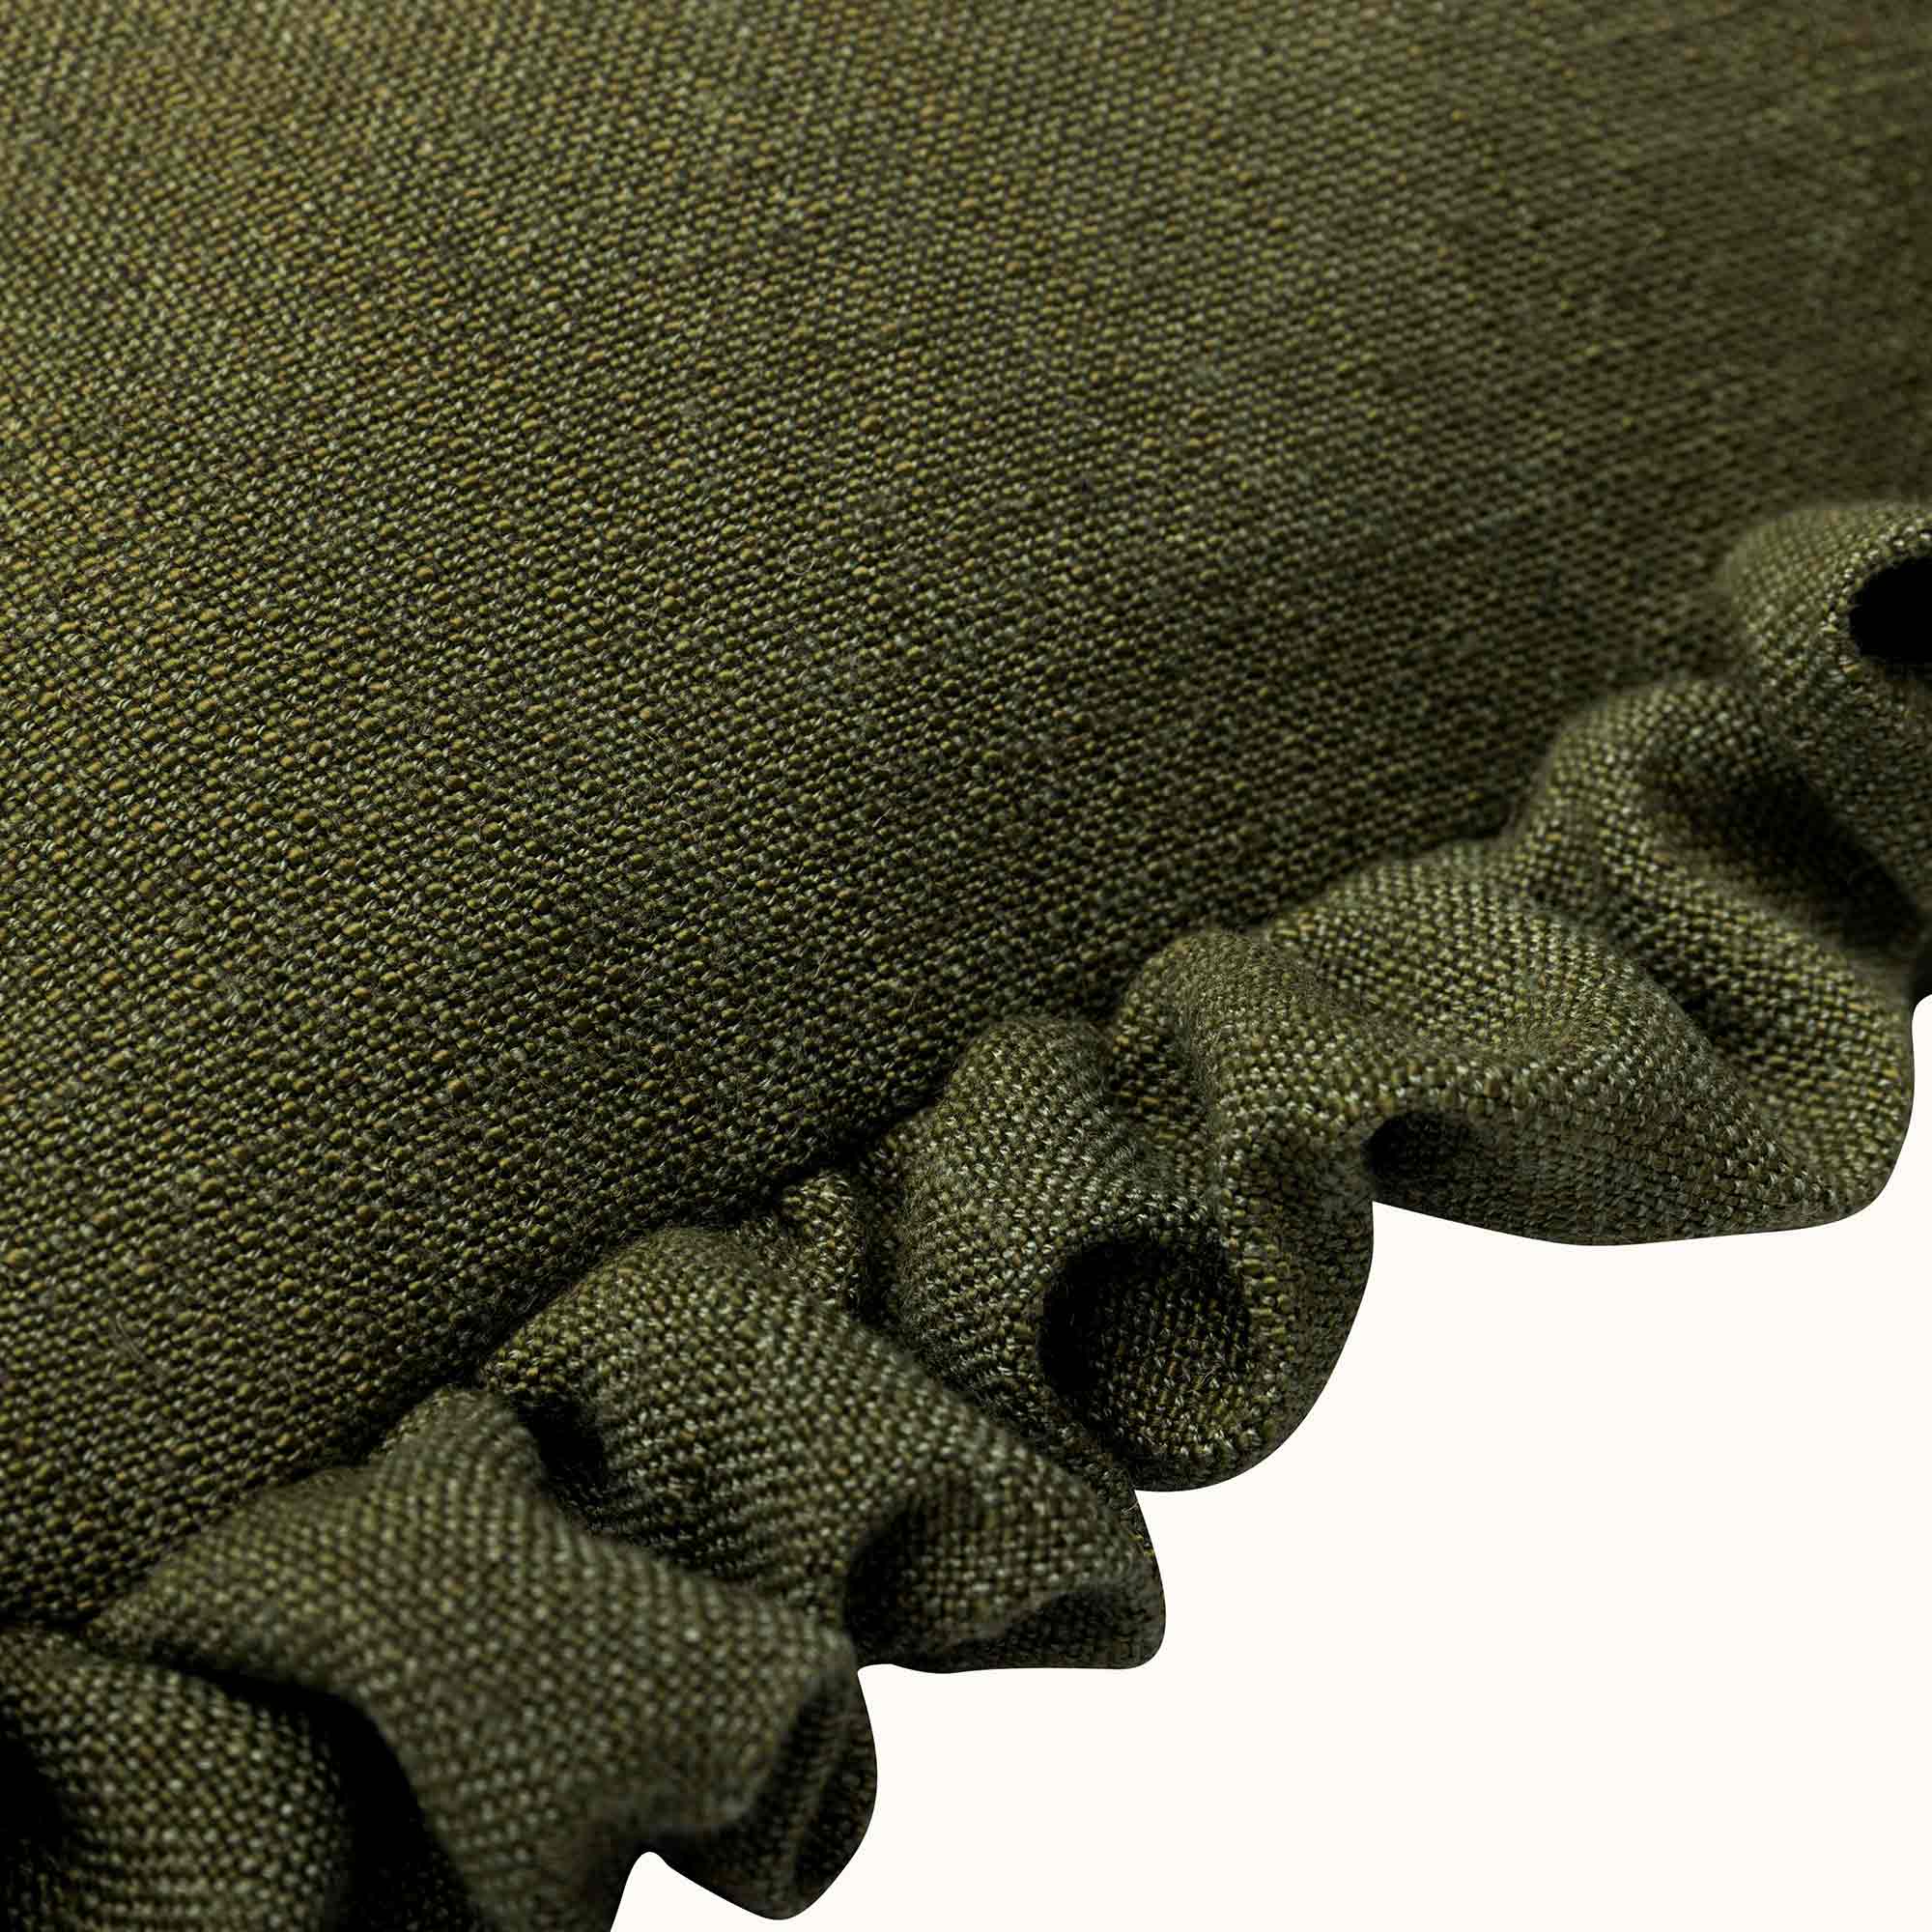 45cm x 45cm Square Cushion with Ruffles Close Up Detail